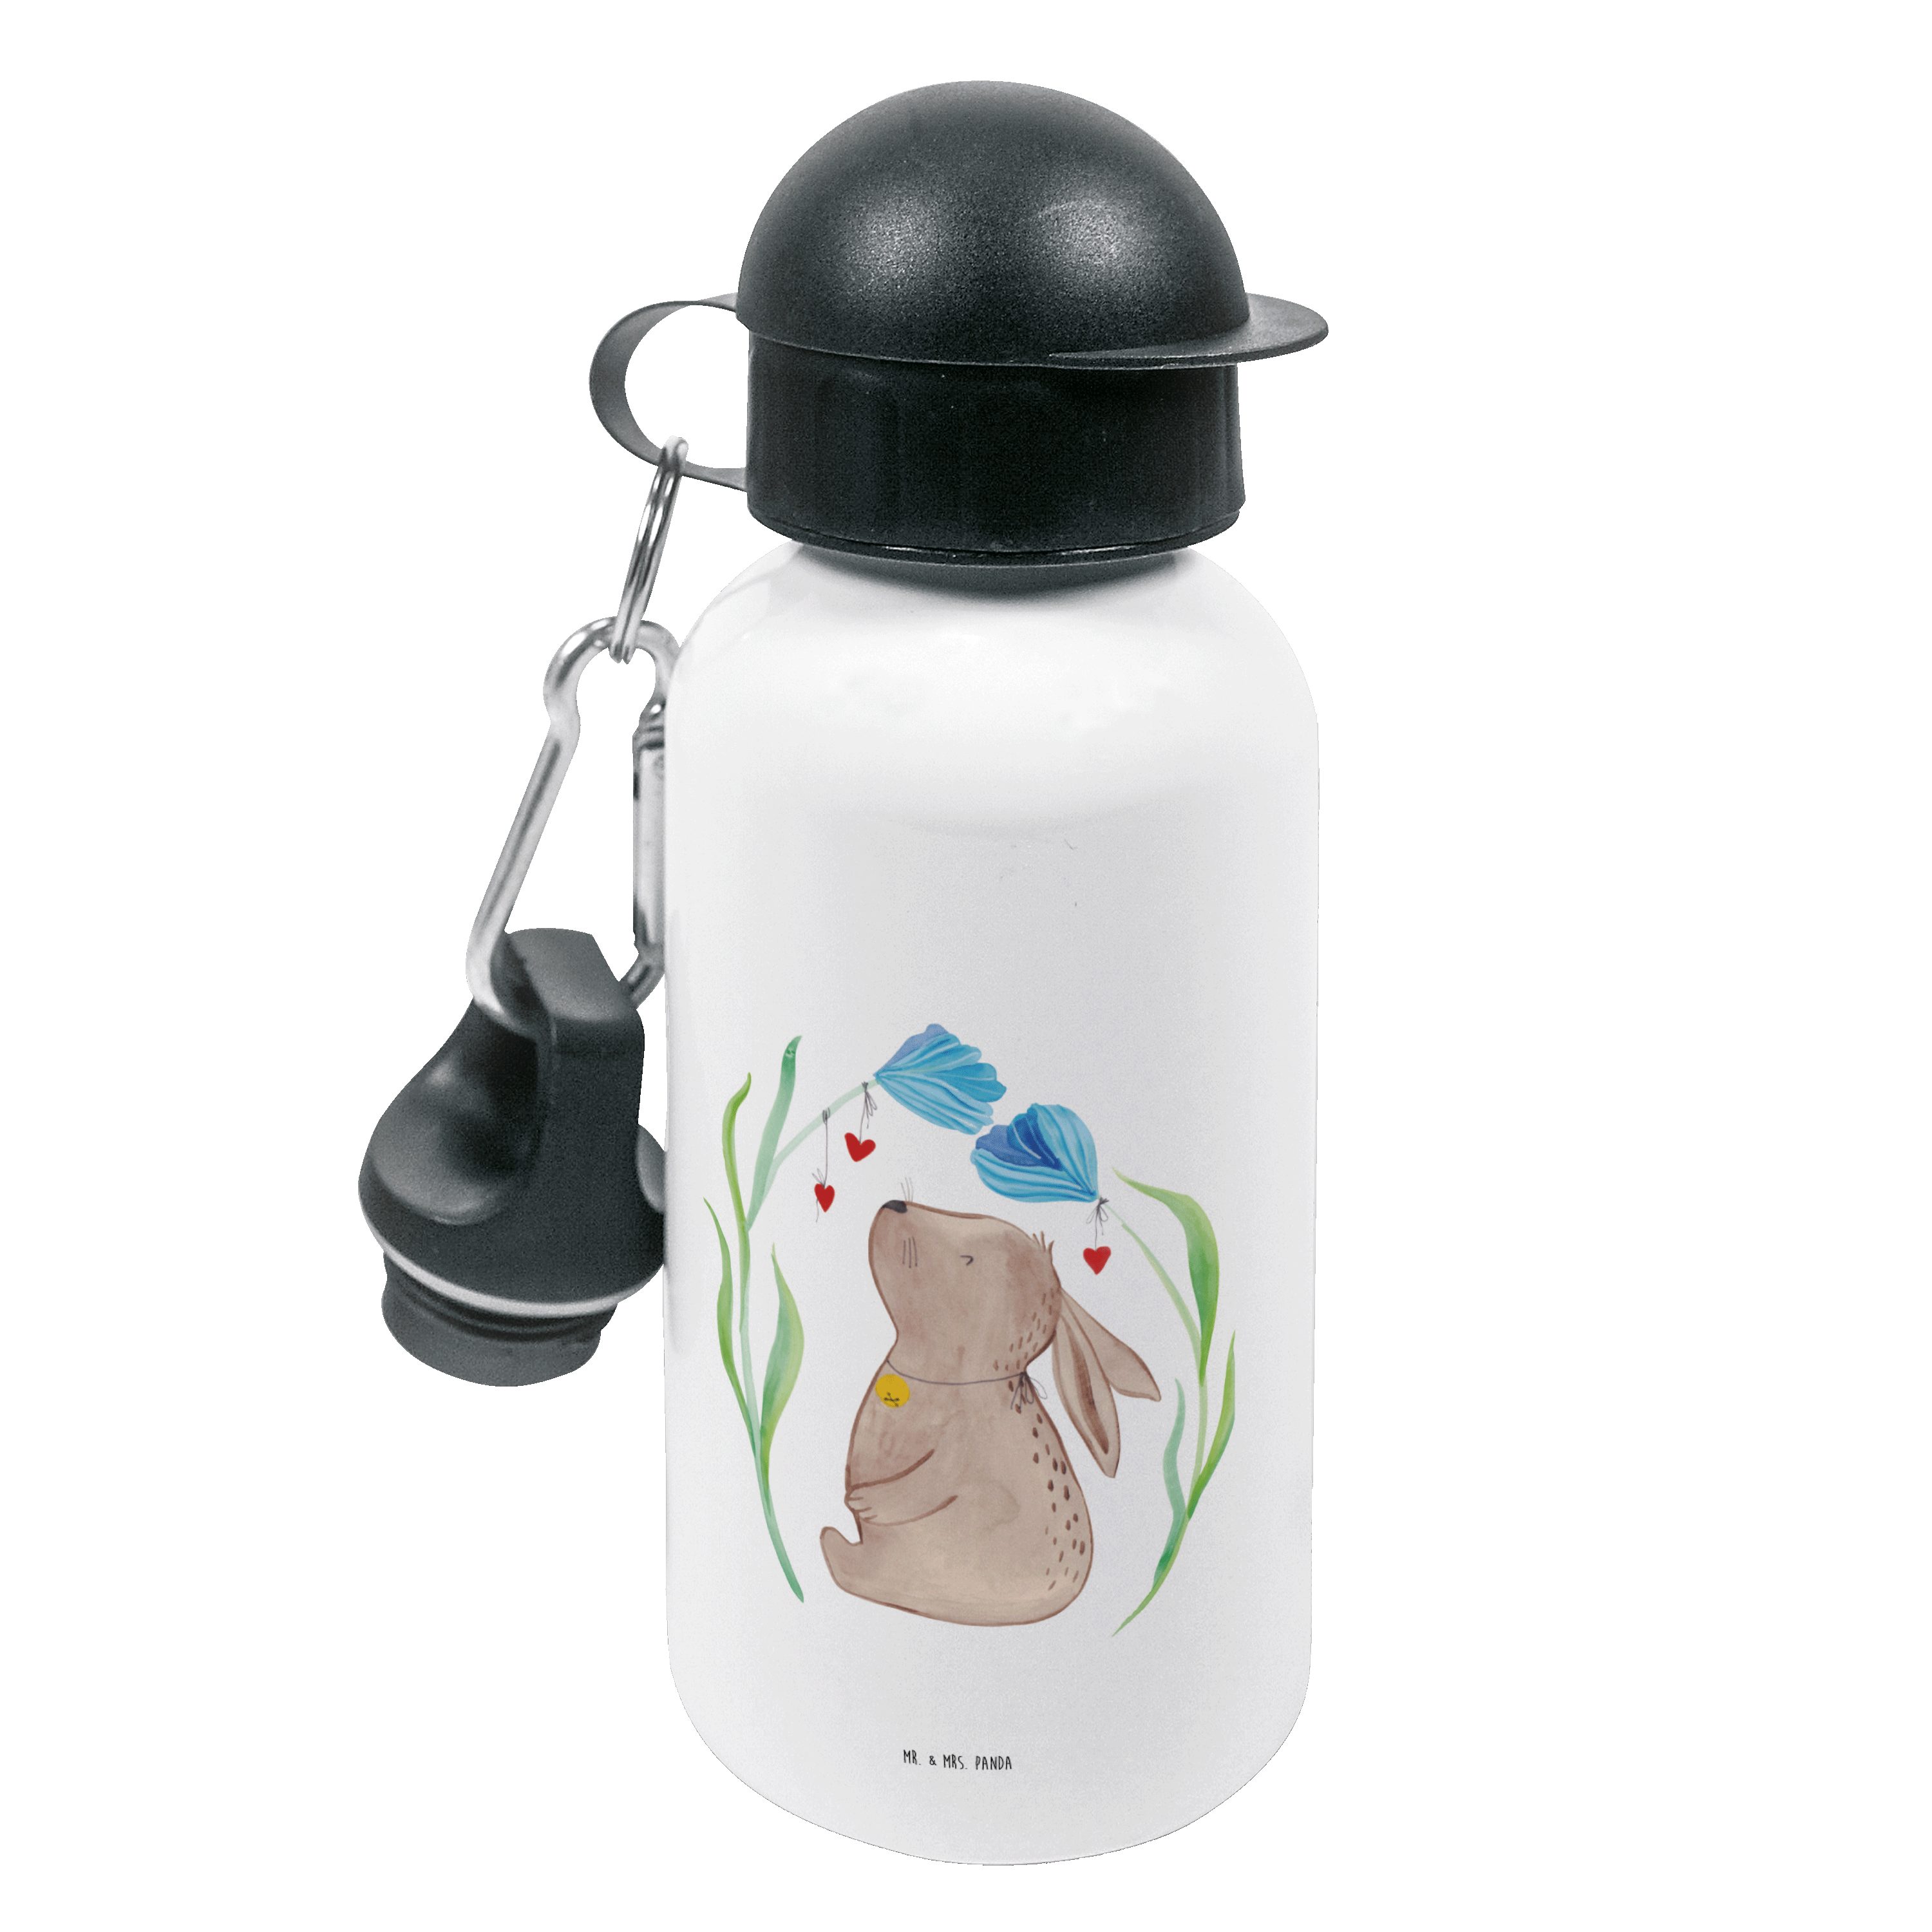 Mr. & Mrs. Panda Trinkflasche Hase Blume - Weiß - Geschenk, Kindertrinkflasche, Schwangerschaft, Os